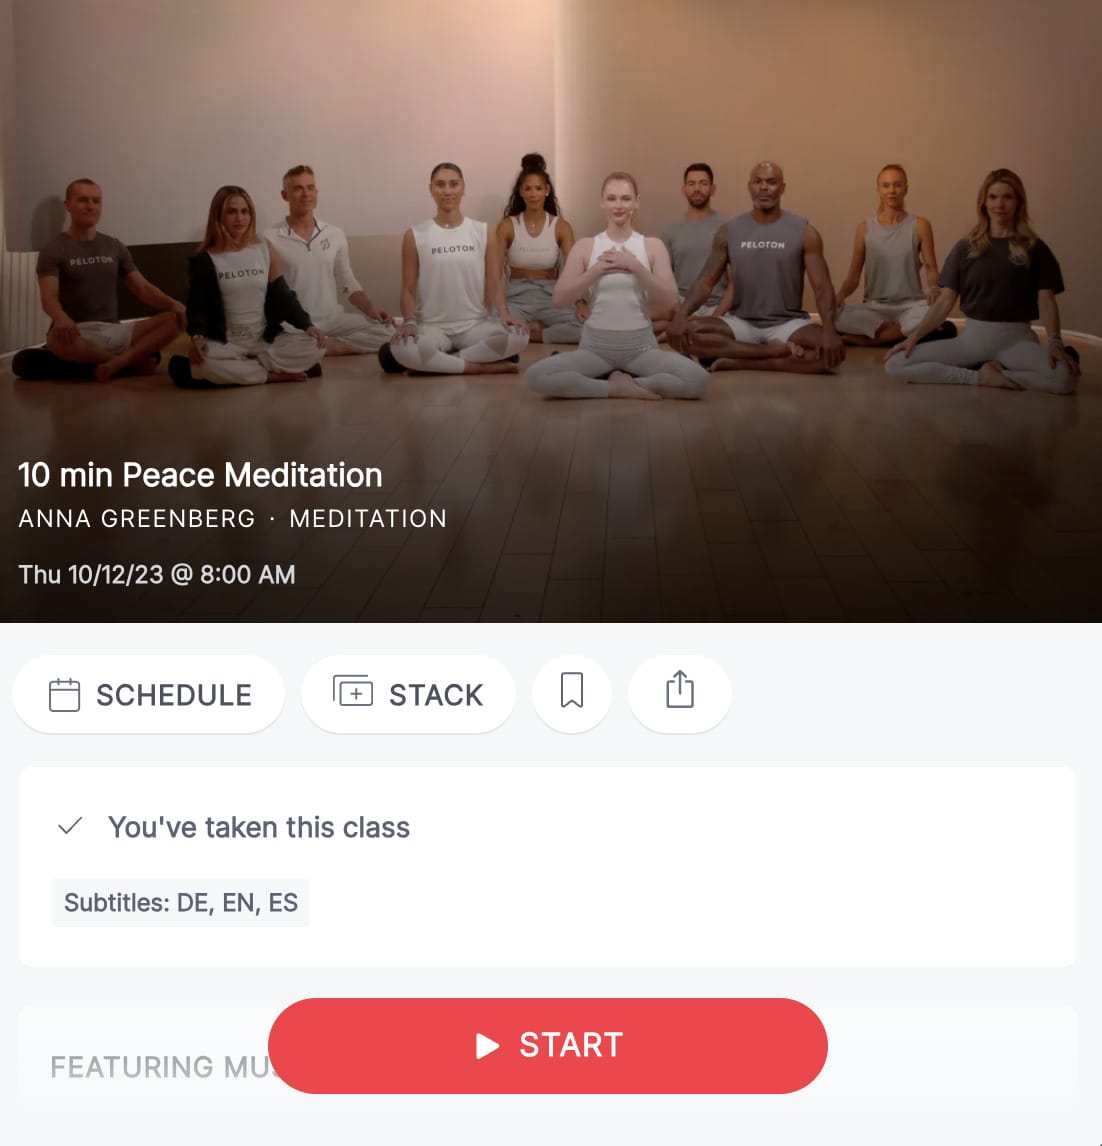 Anna Greenberg's Peace Meditation from October 12, 2023.